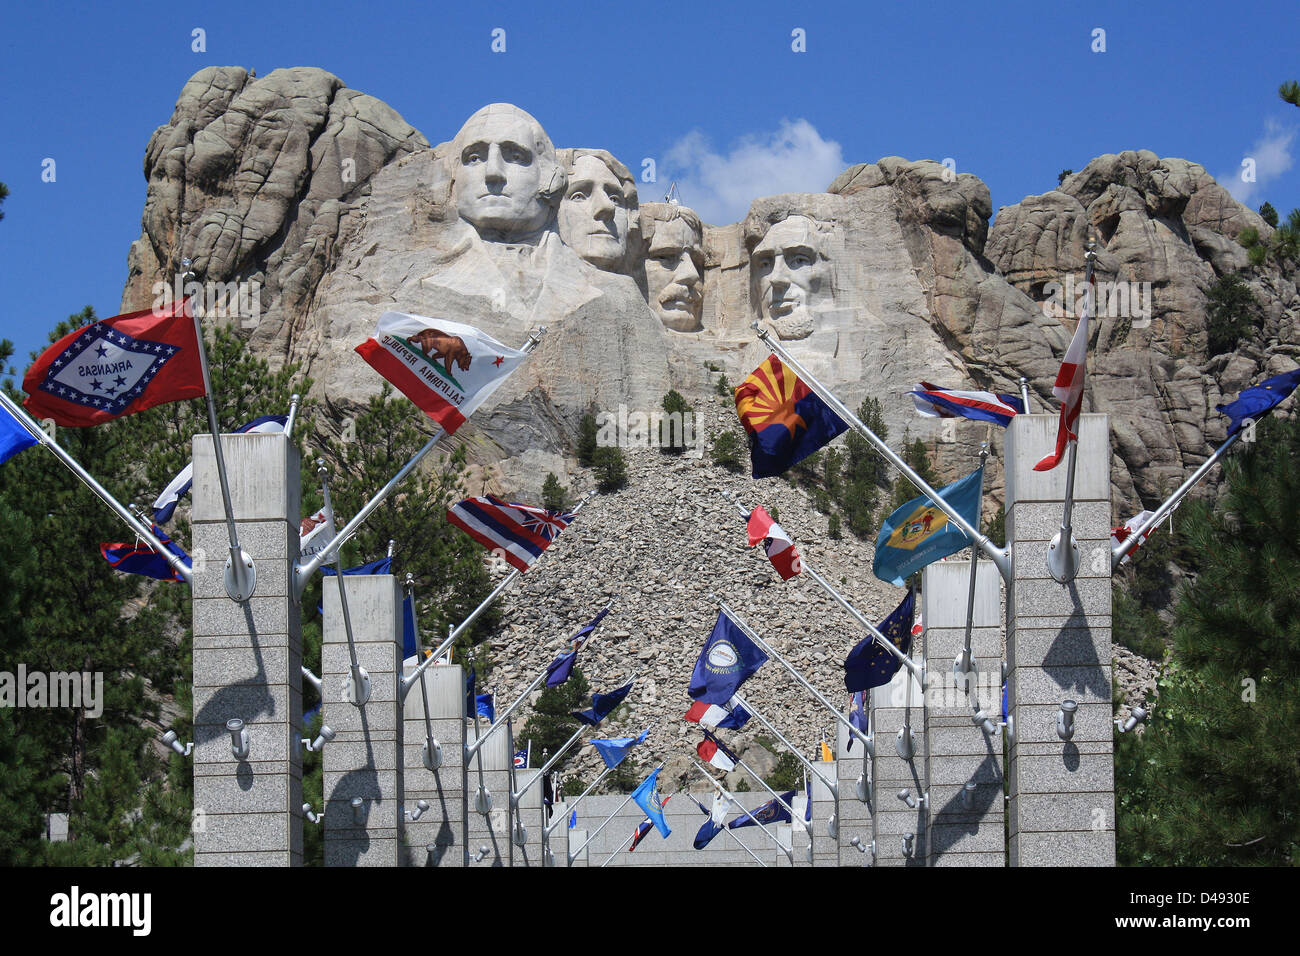 Das Mount Rushmore National Memorial, Skulptur, Granit Gesicht, Rushmore, Keystone, South Dakota, Vereinigte Staaten von Amerika. Stockfoto